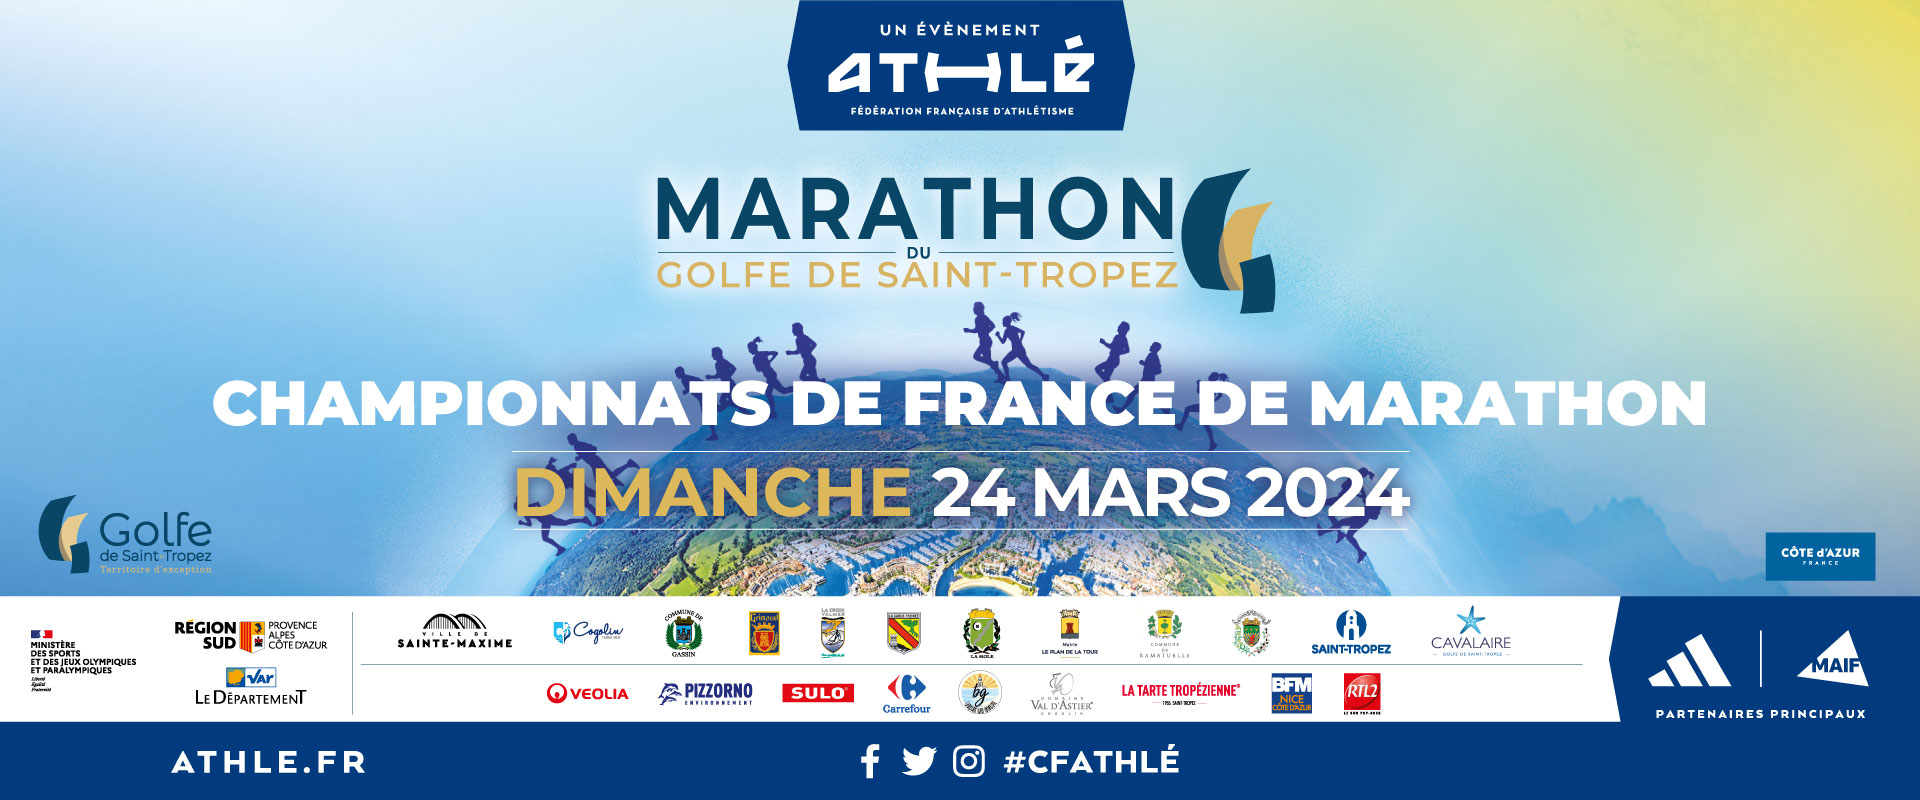 MGST-2024-Championnat-de-France-de-Marathon.jpg